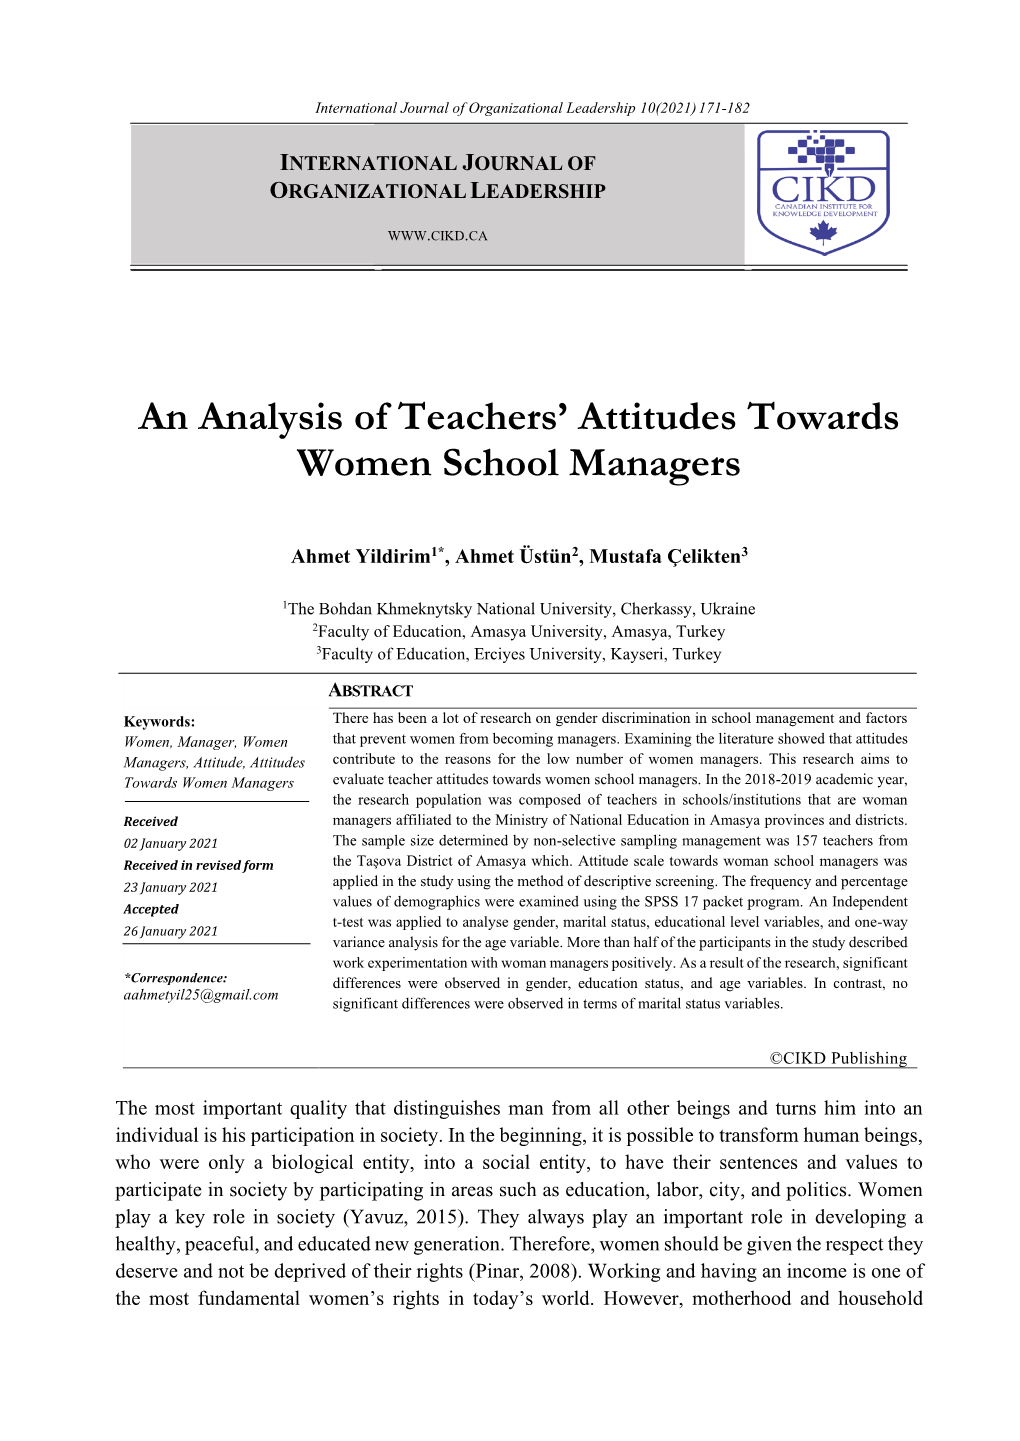 An Analysis of Teachers' Attitudes Towards Women School Managers